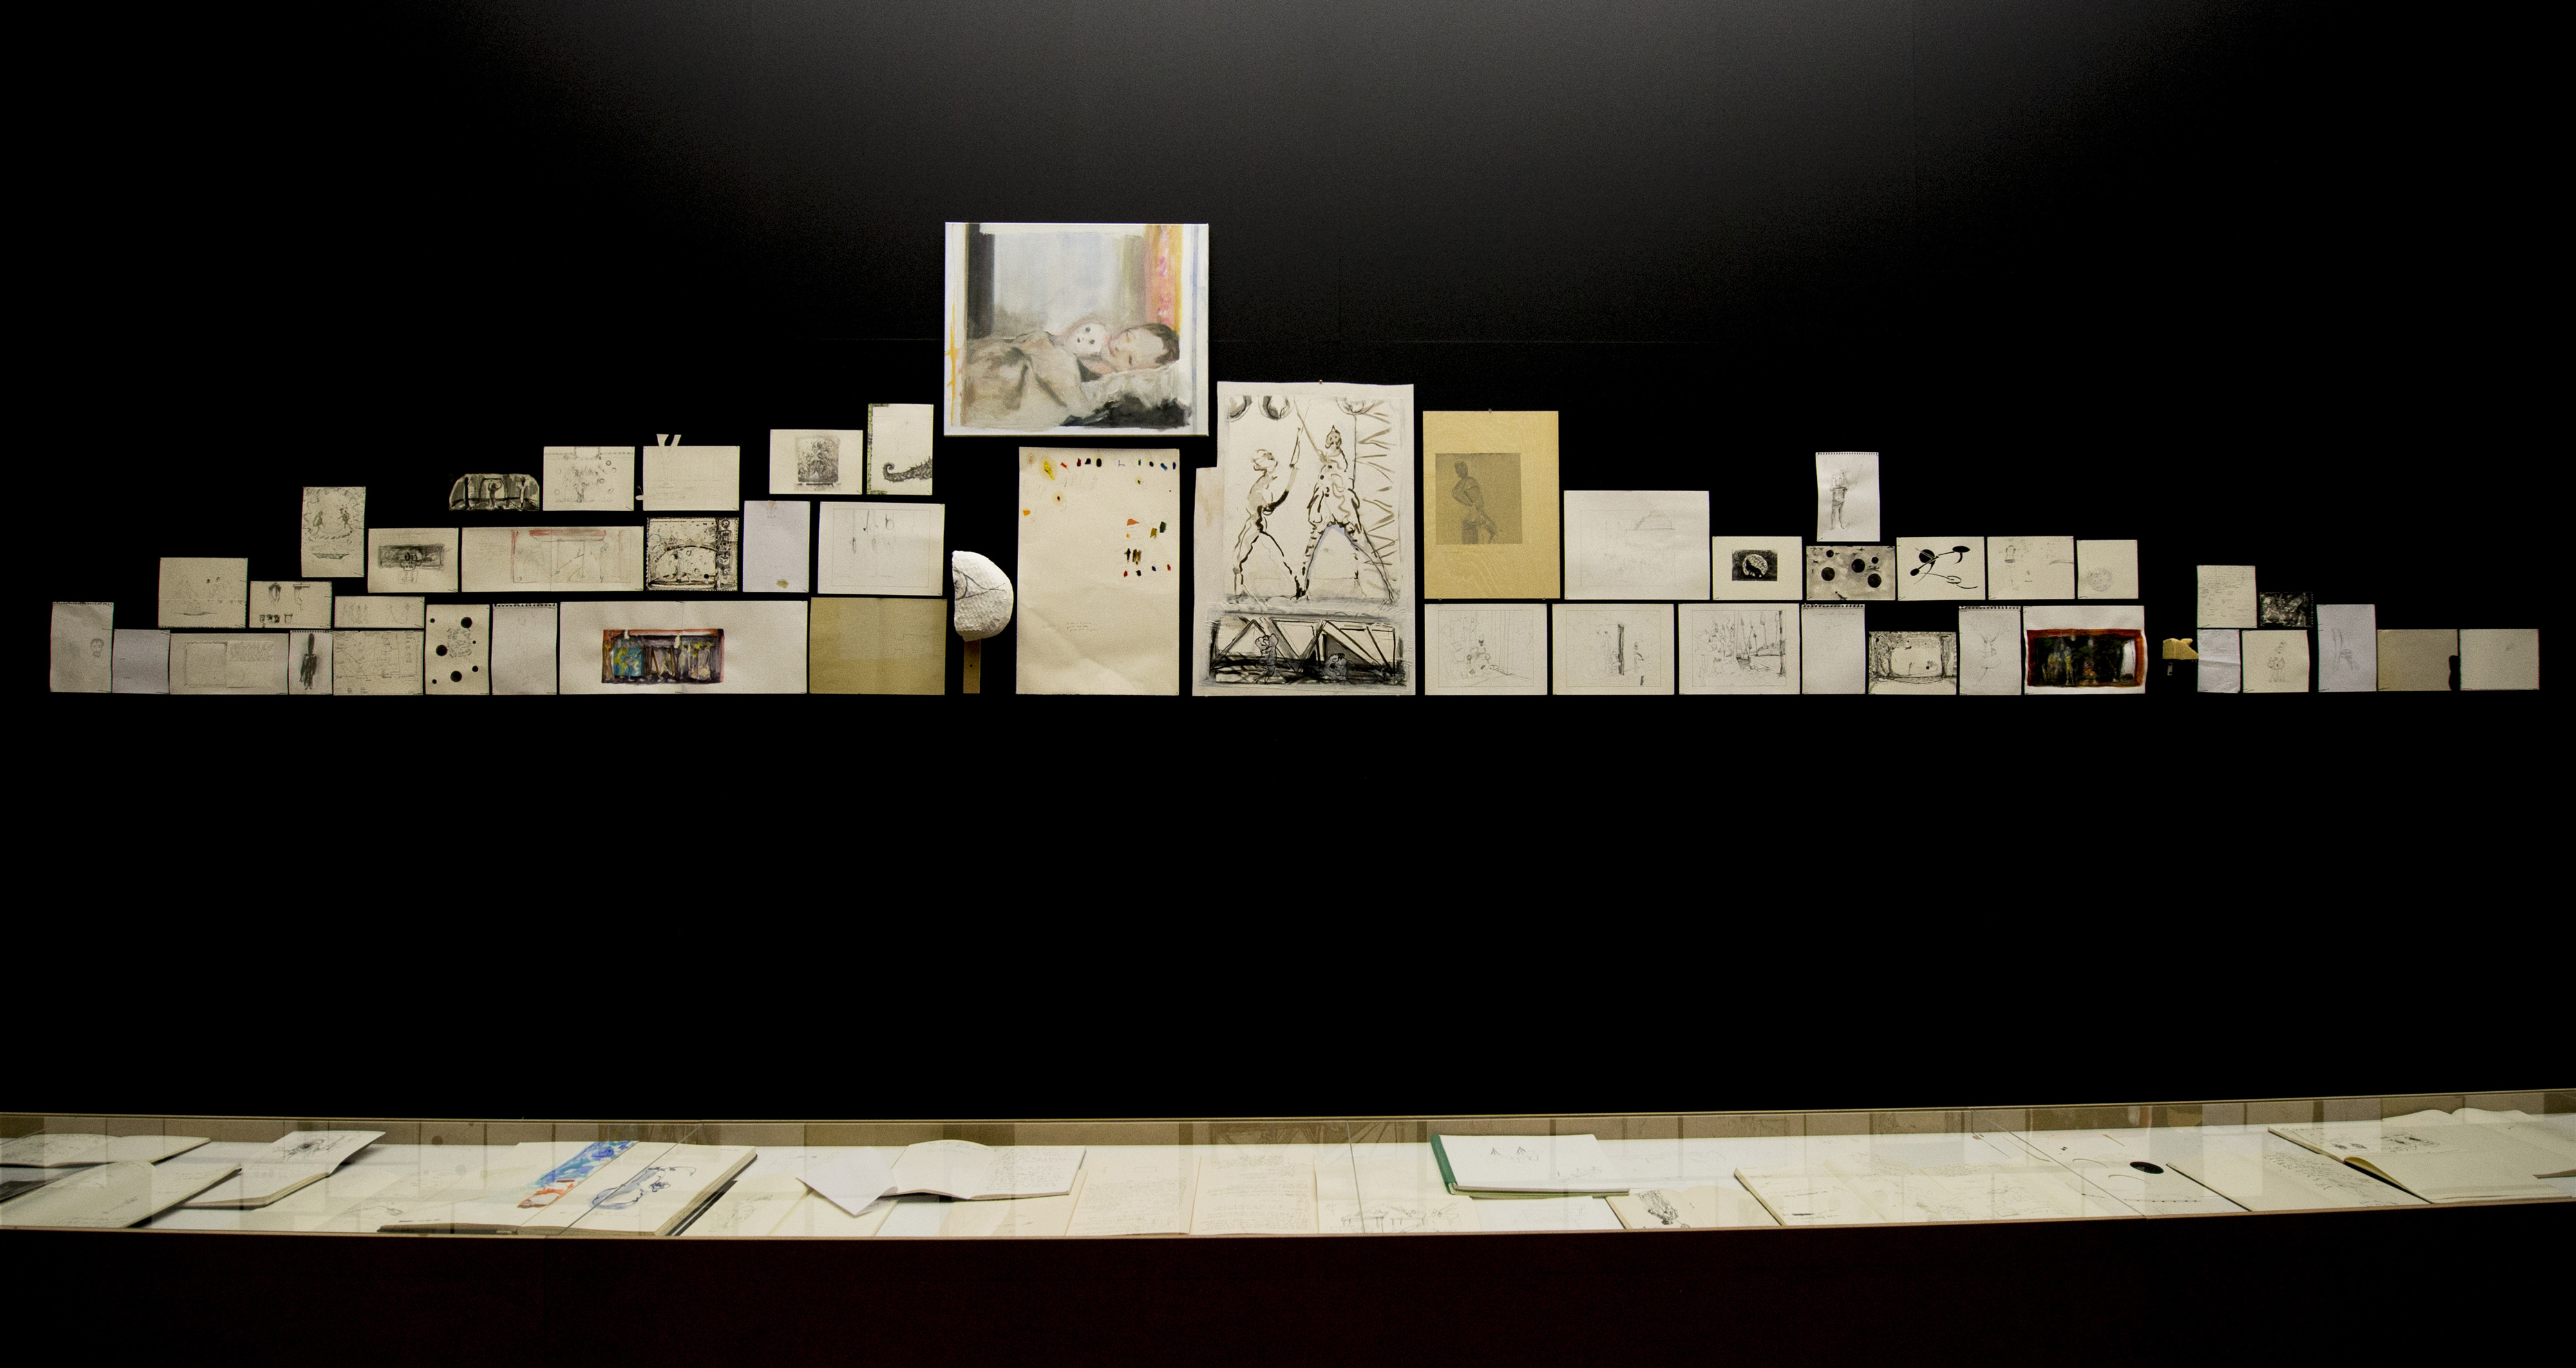 Galerie Barbara Thumm \ Valérie Favre &#8211; Une exposition monographique